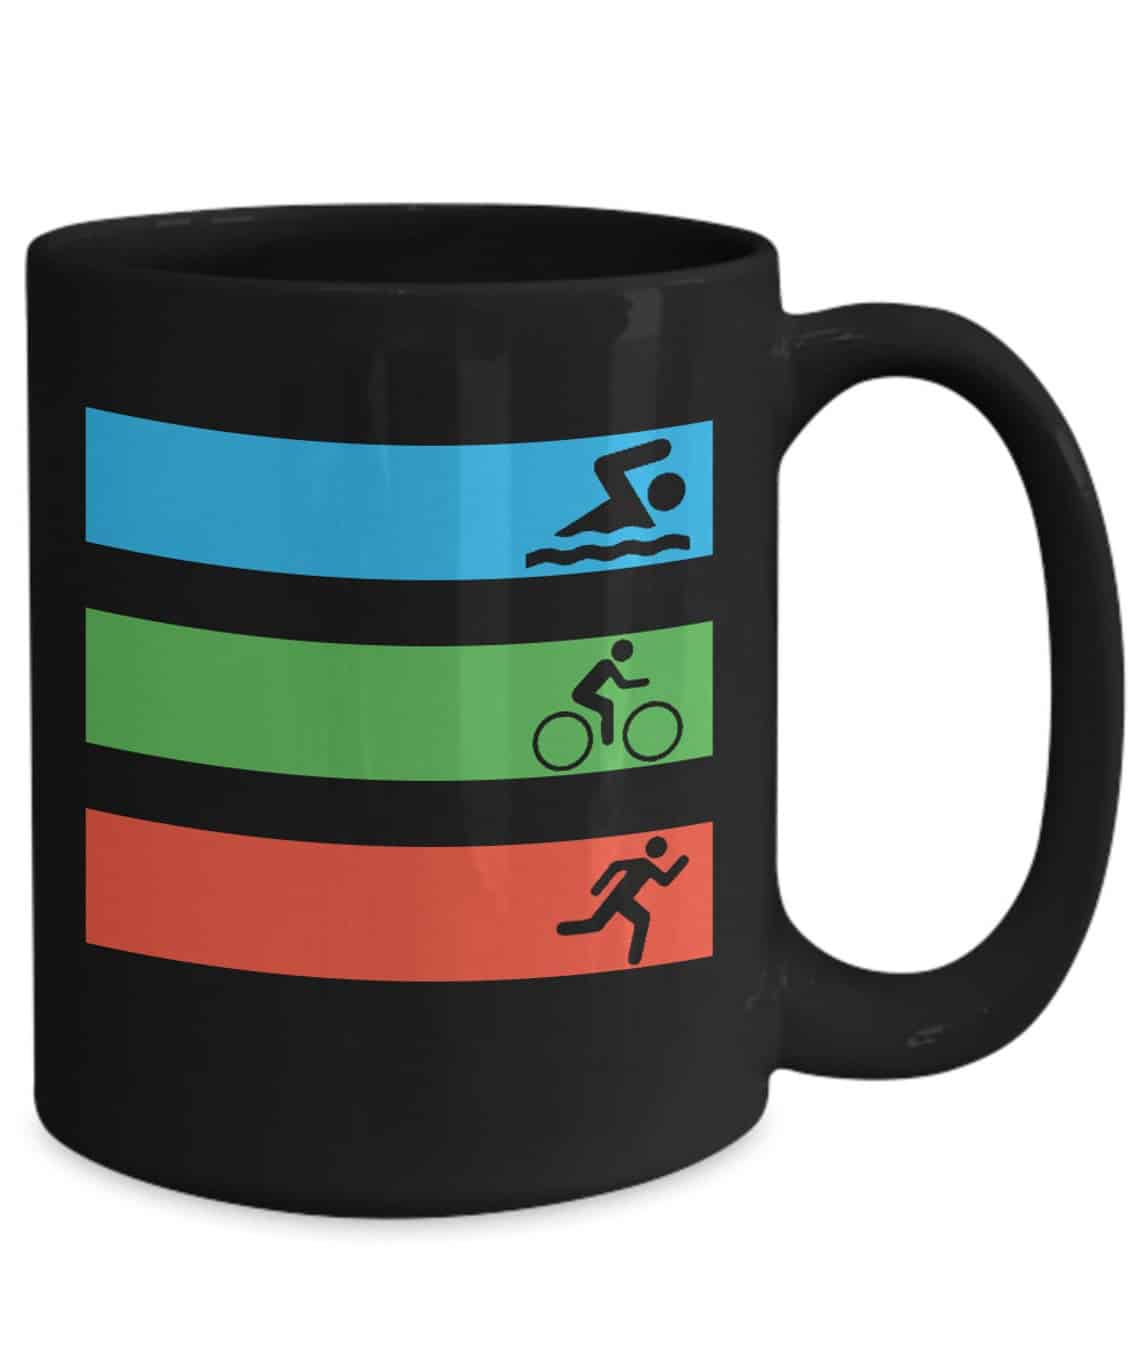 Triathlon Specialist’s Mug